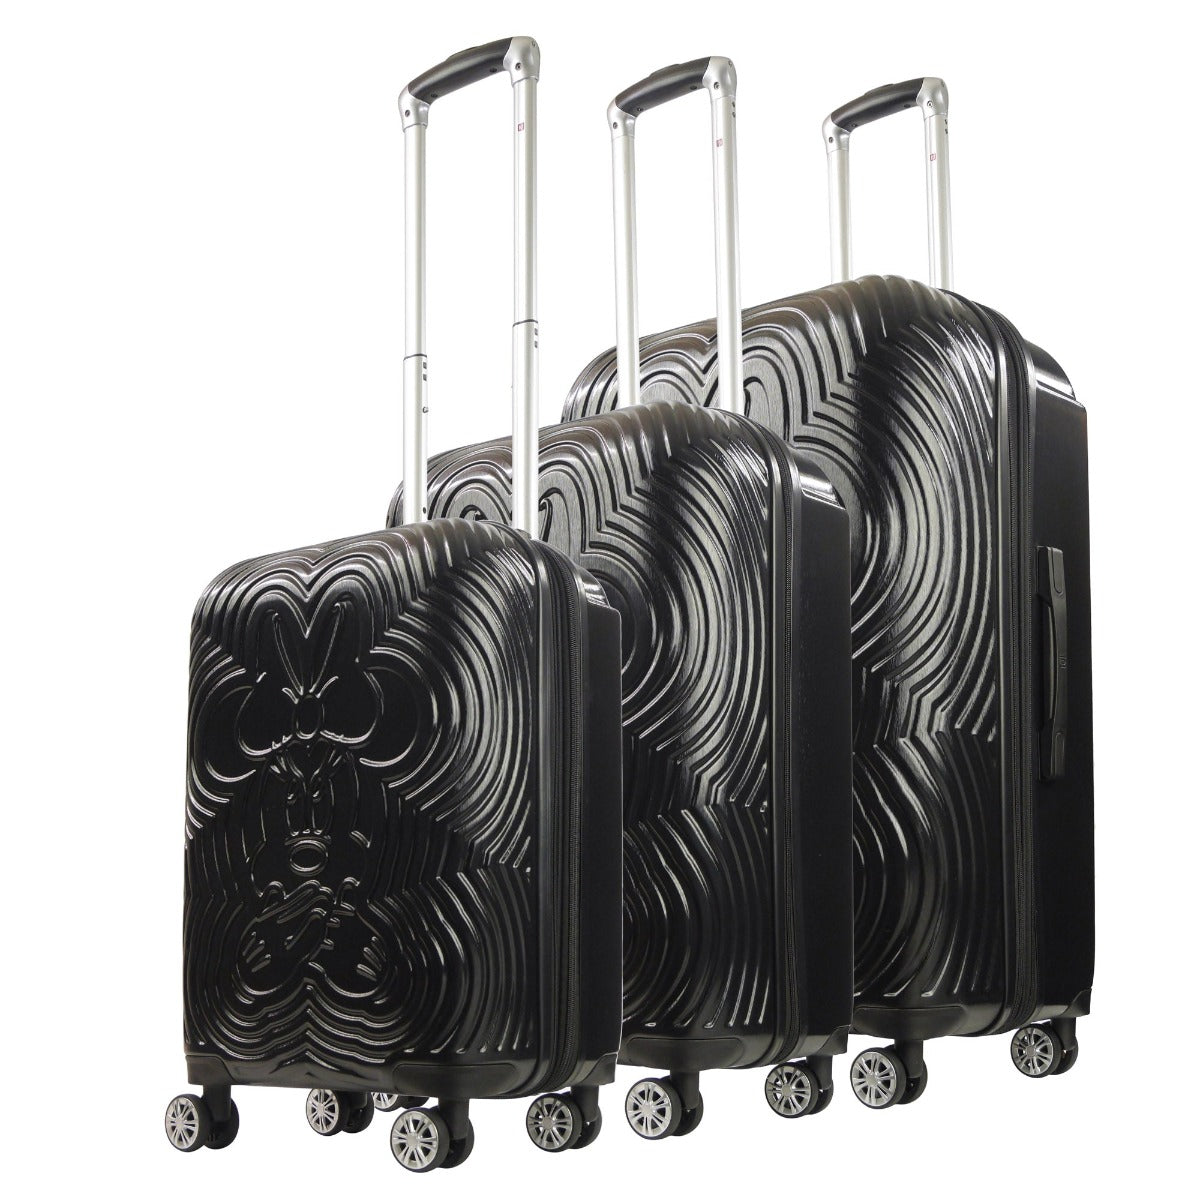 Disney Fūl Playful Minnie Mouse piece spinner suitcase Ful luggage set hard sided black